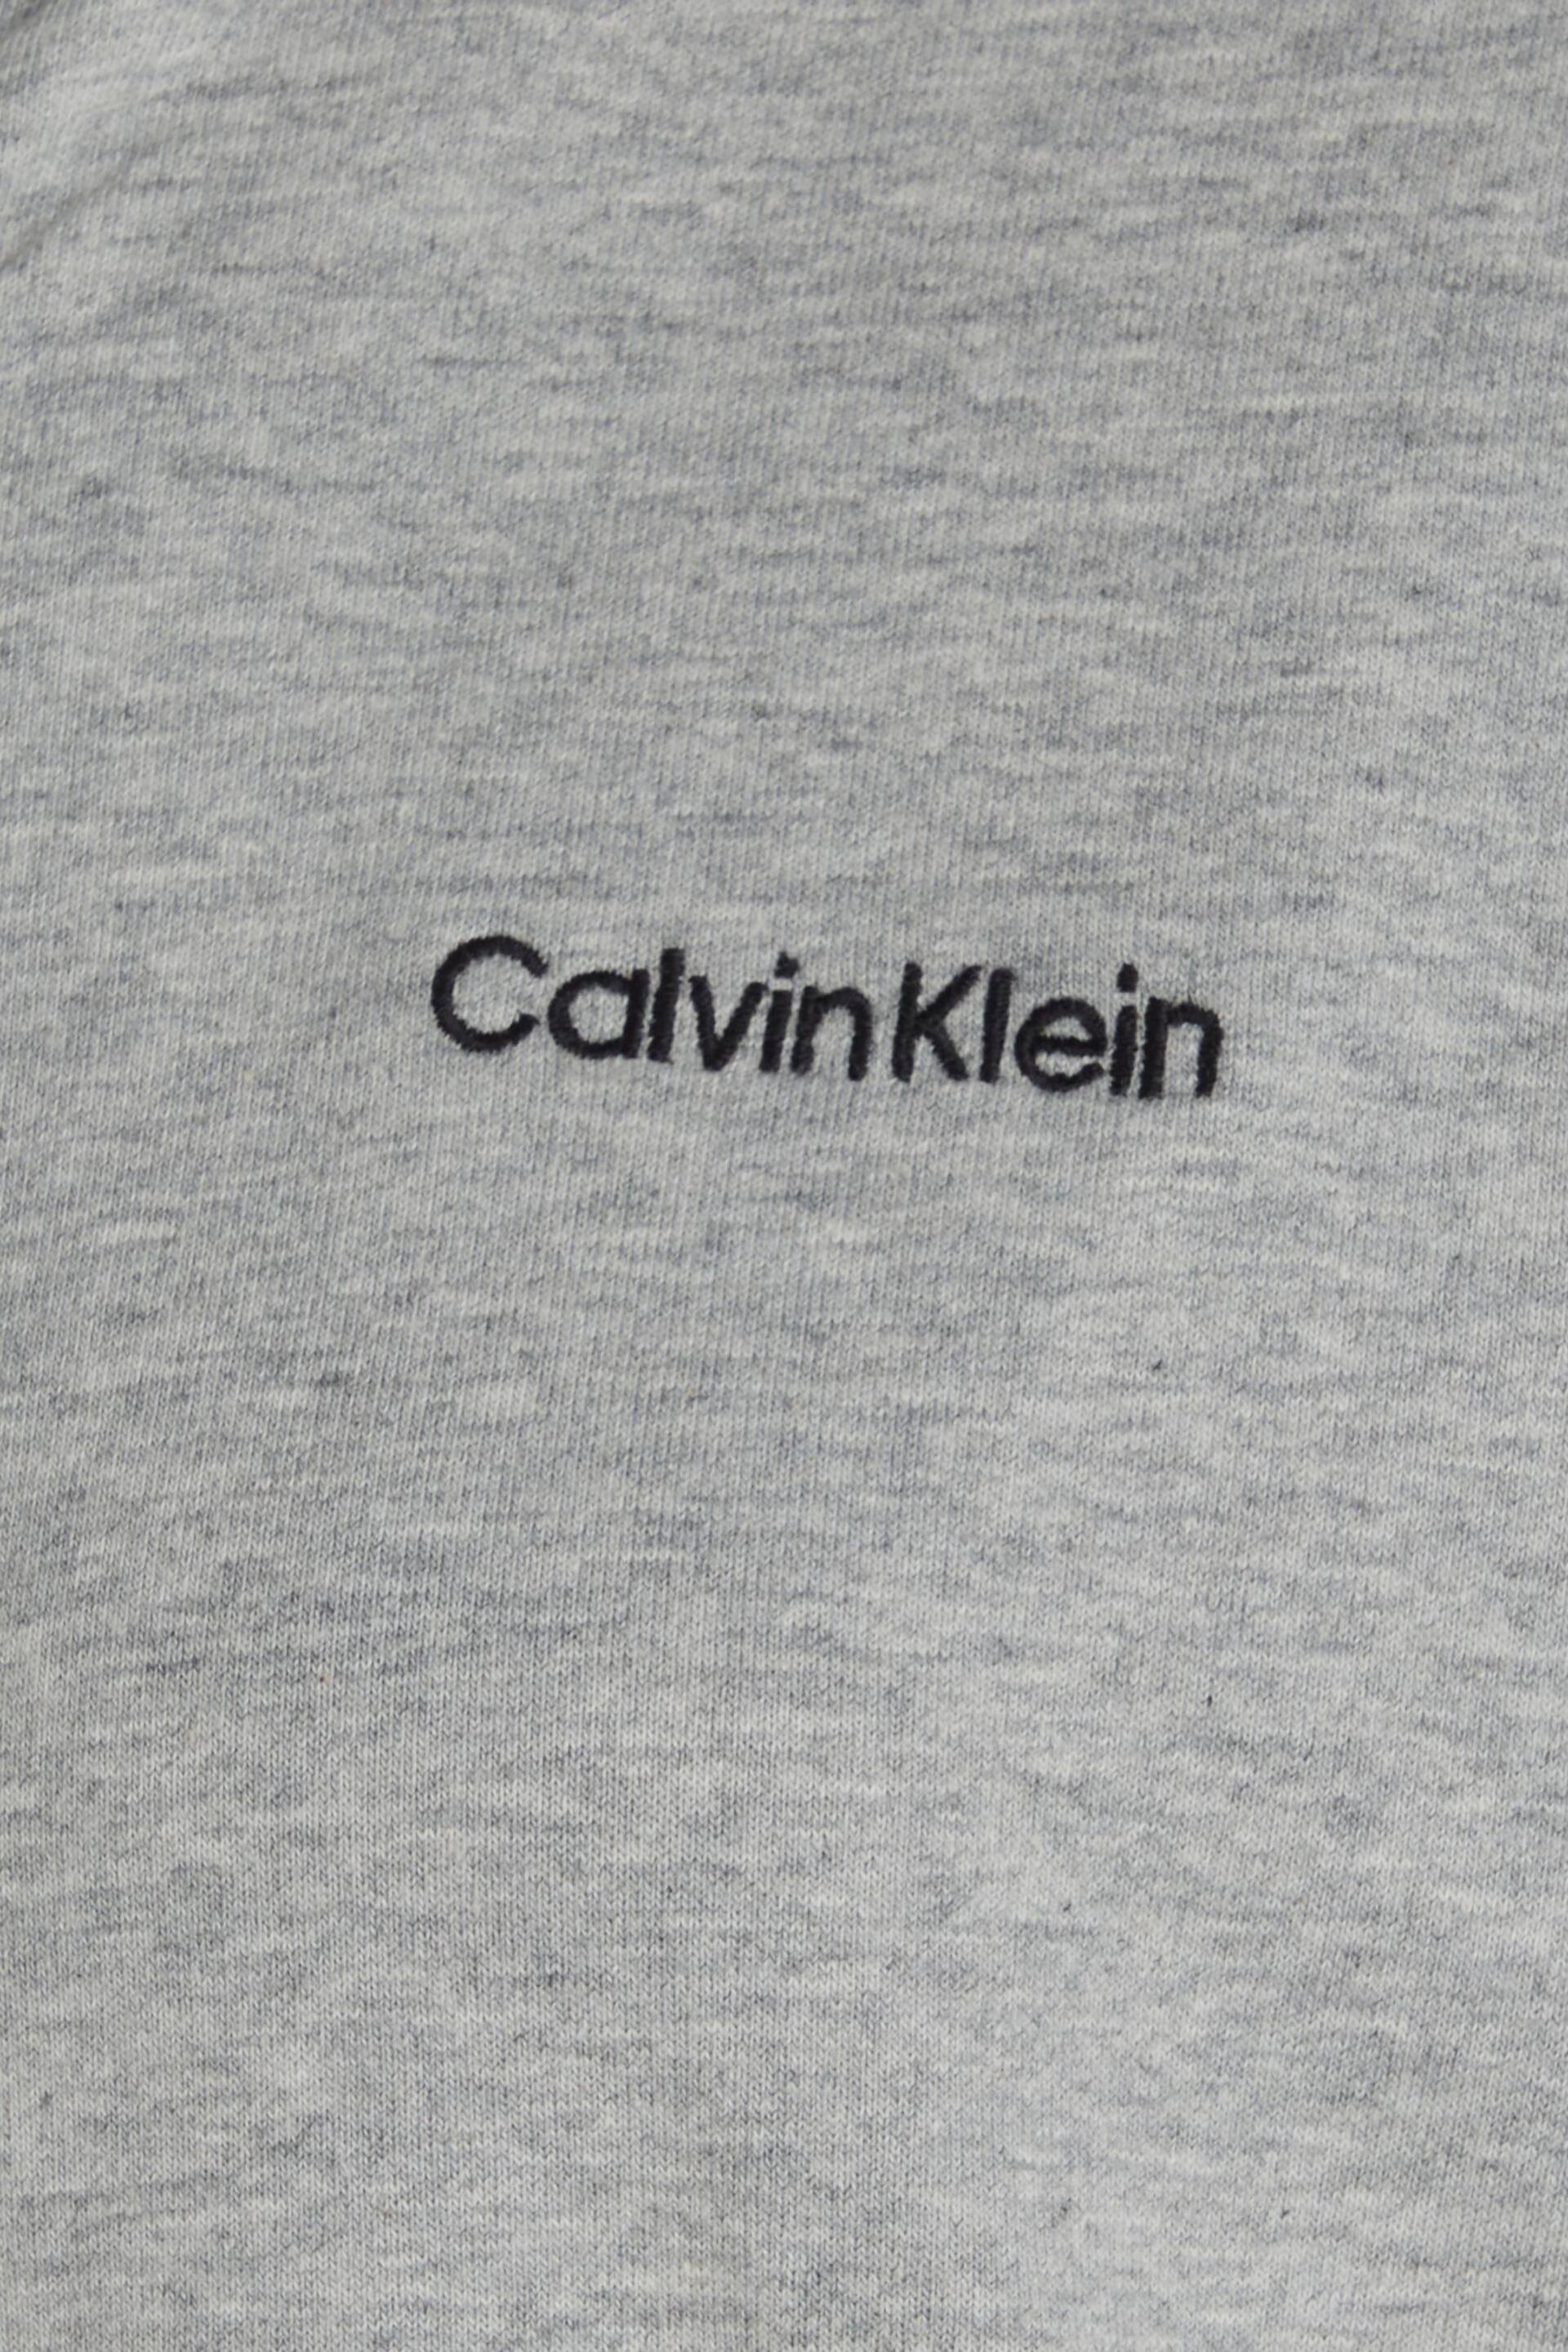 Calvin Klein Grey Modern Cotton Loungewear Full Zip Hoodie - Image 6 of 6